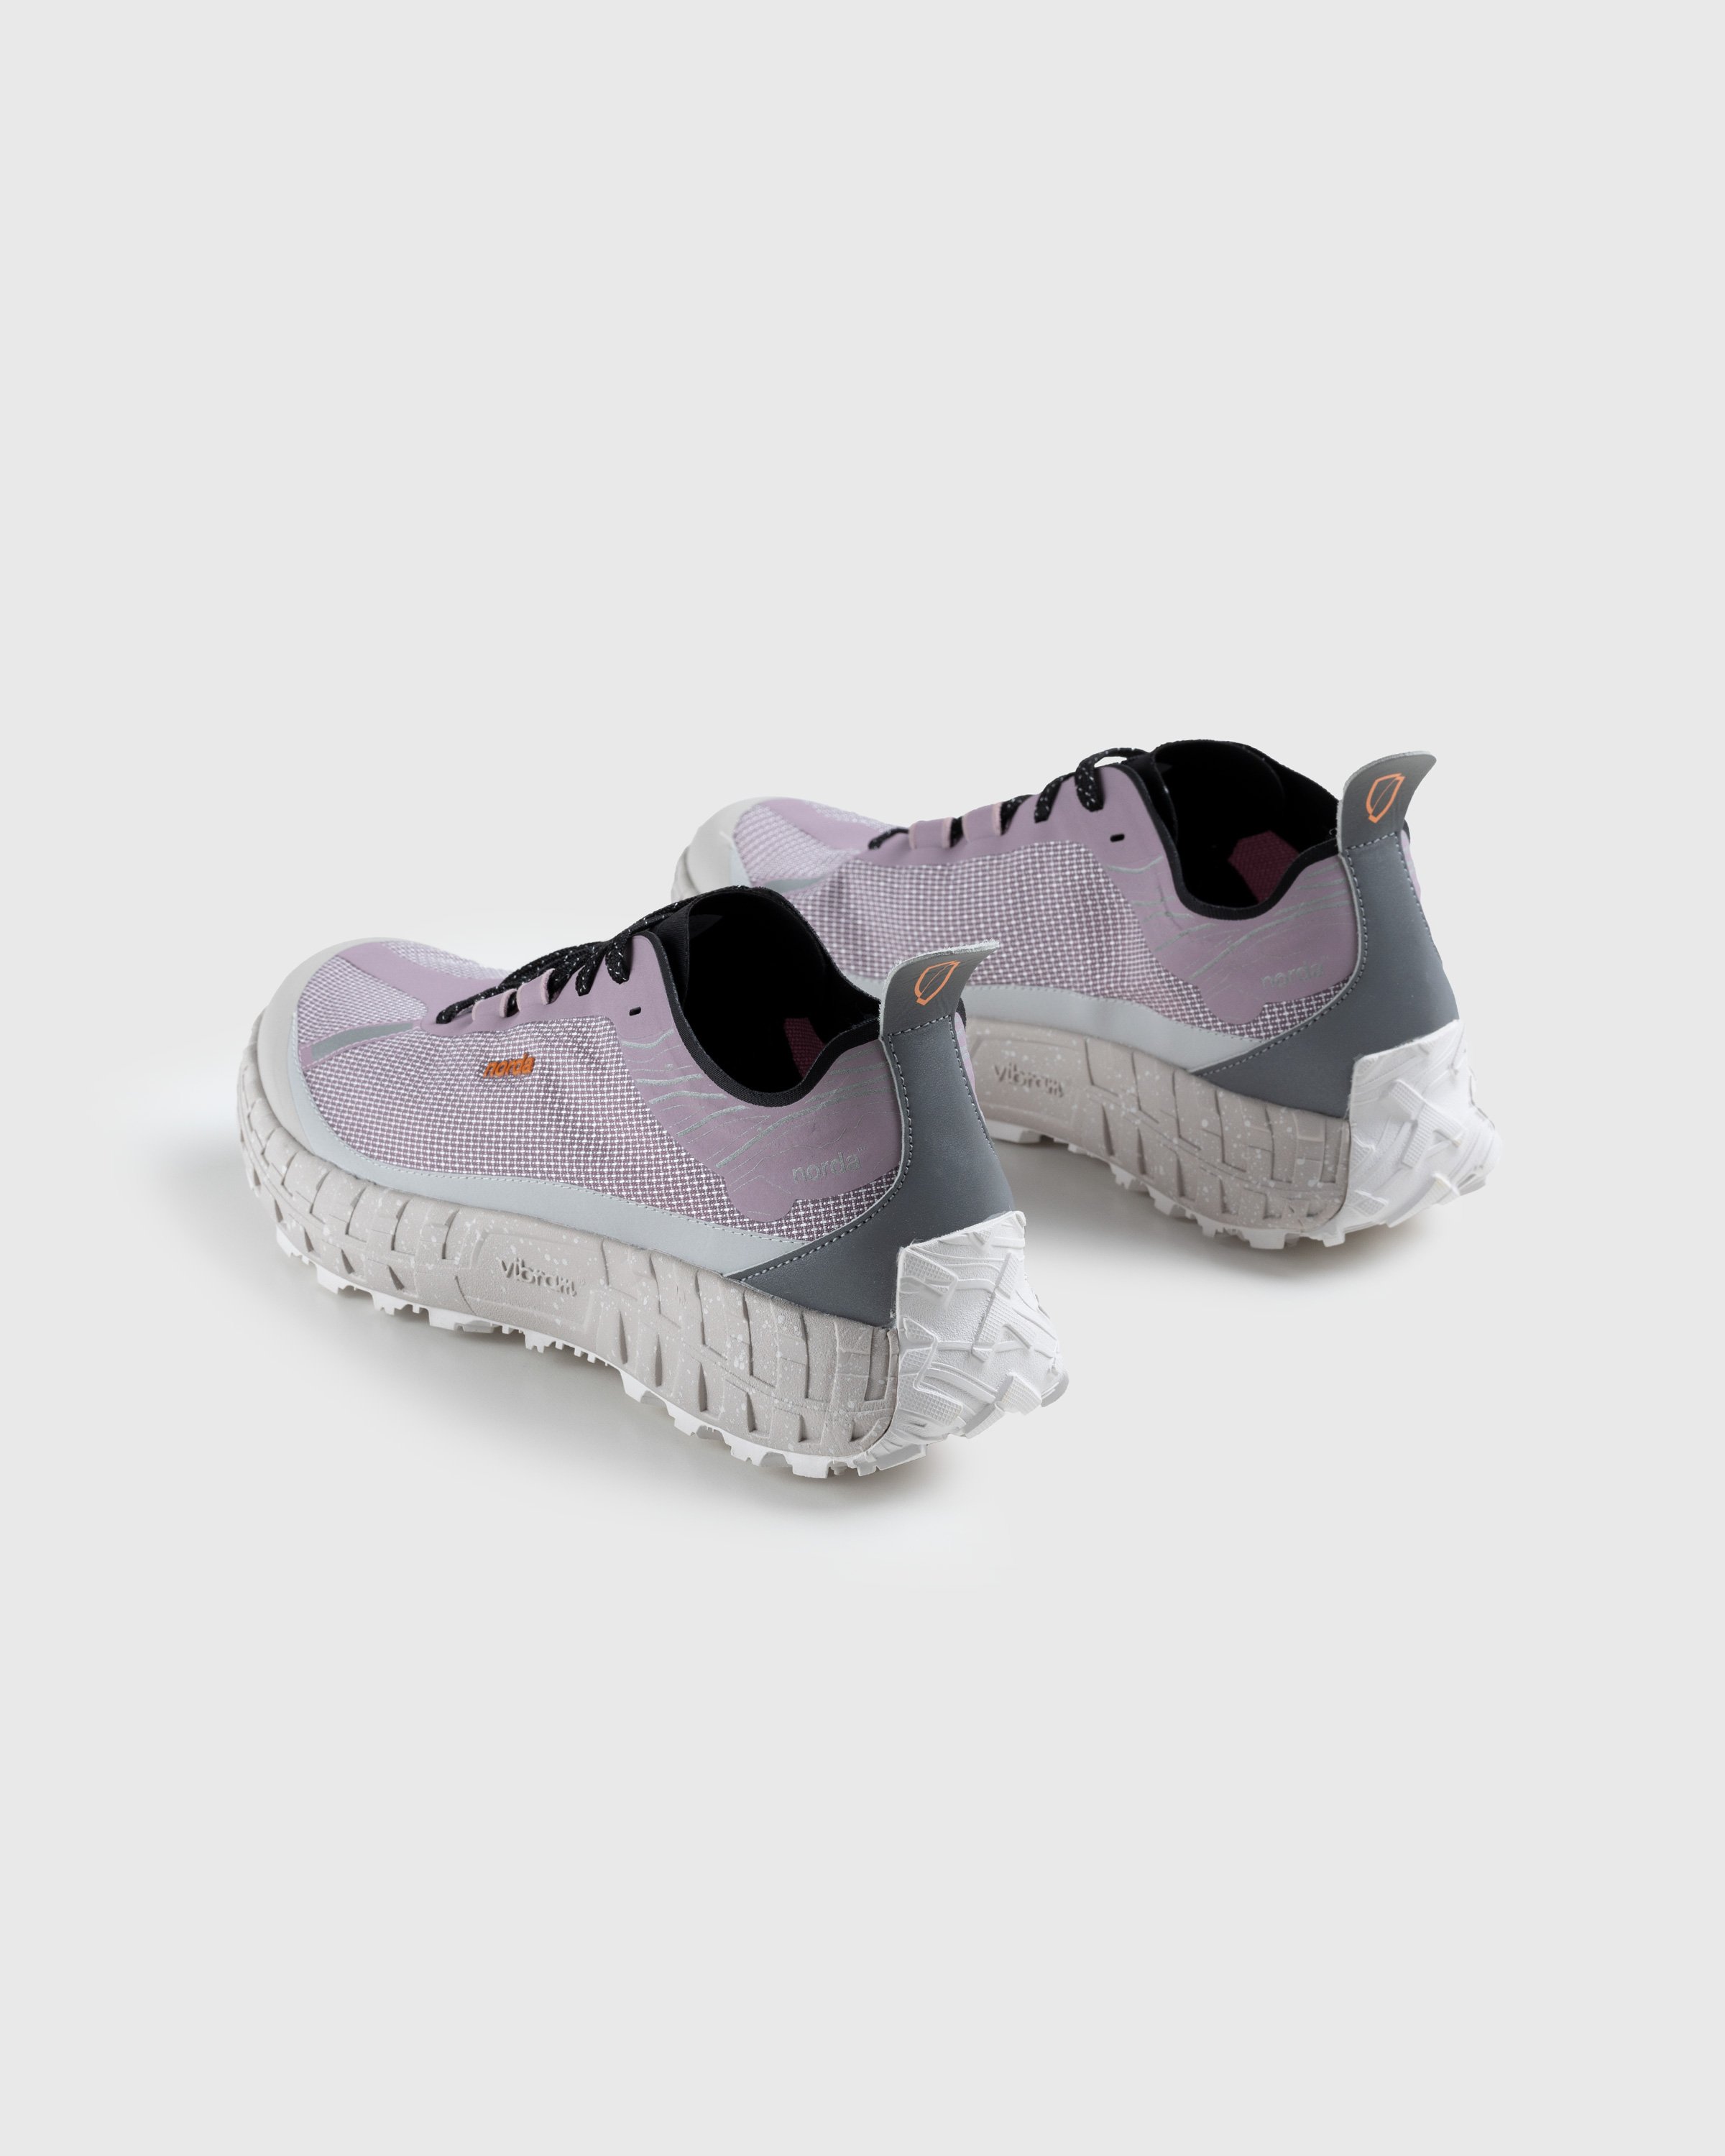 Norda - 001 M LTD Edition Lilac - Footwear - Purple - Image 4